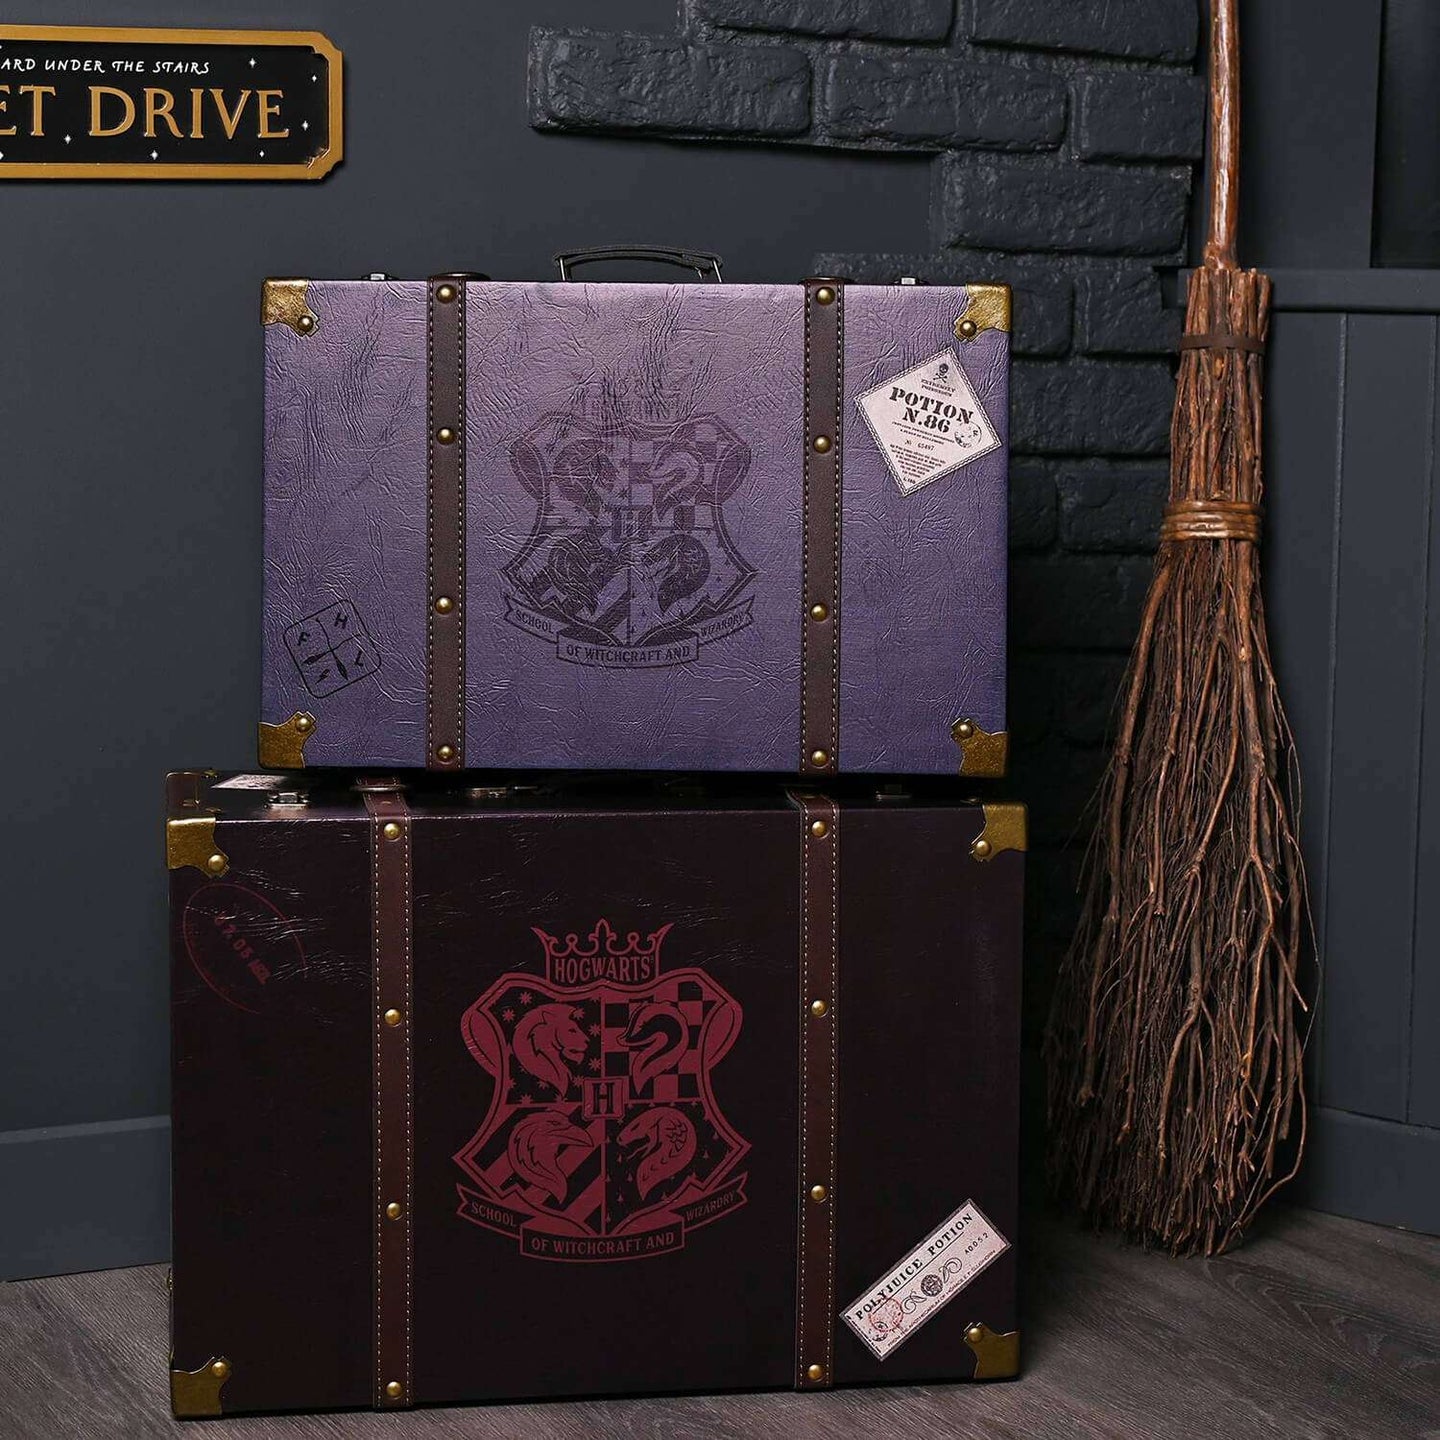 Harry Potter Alumni Hogwarts Suitcases (Set of 2)